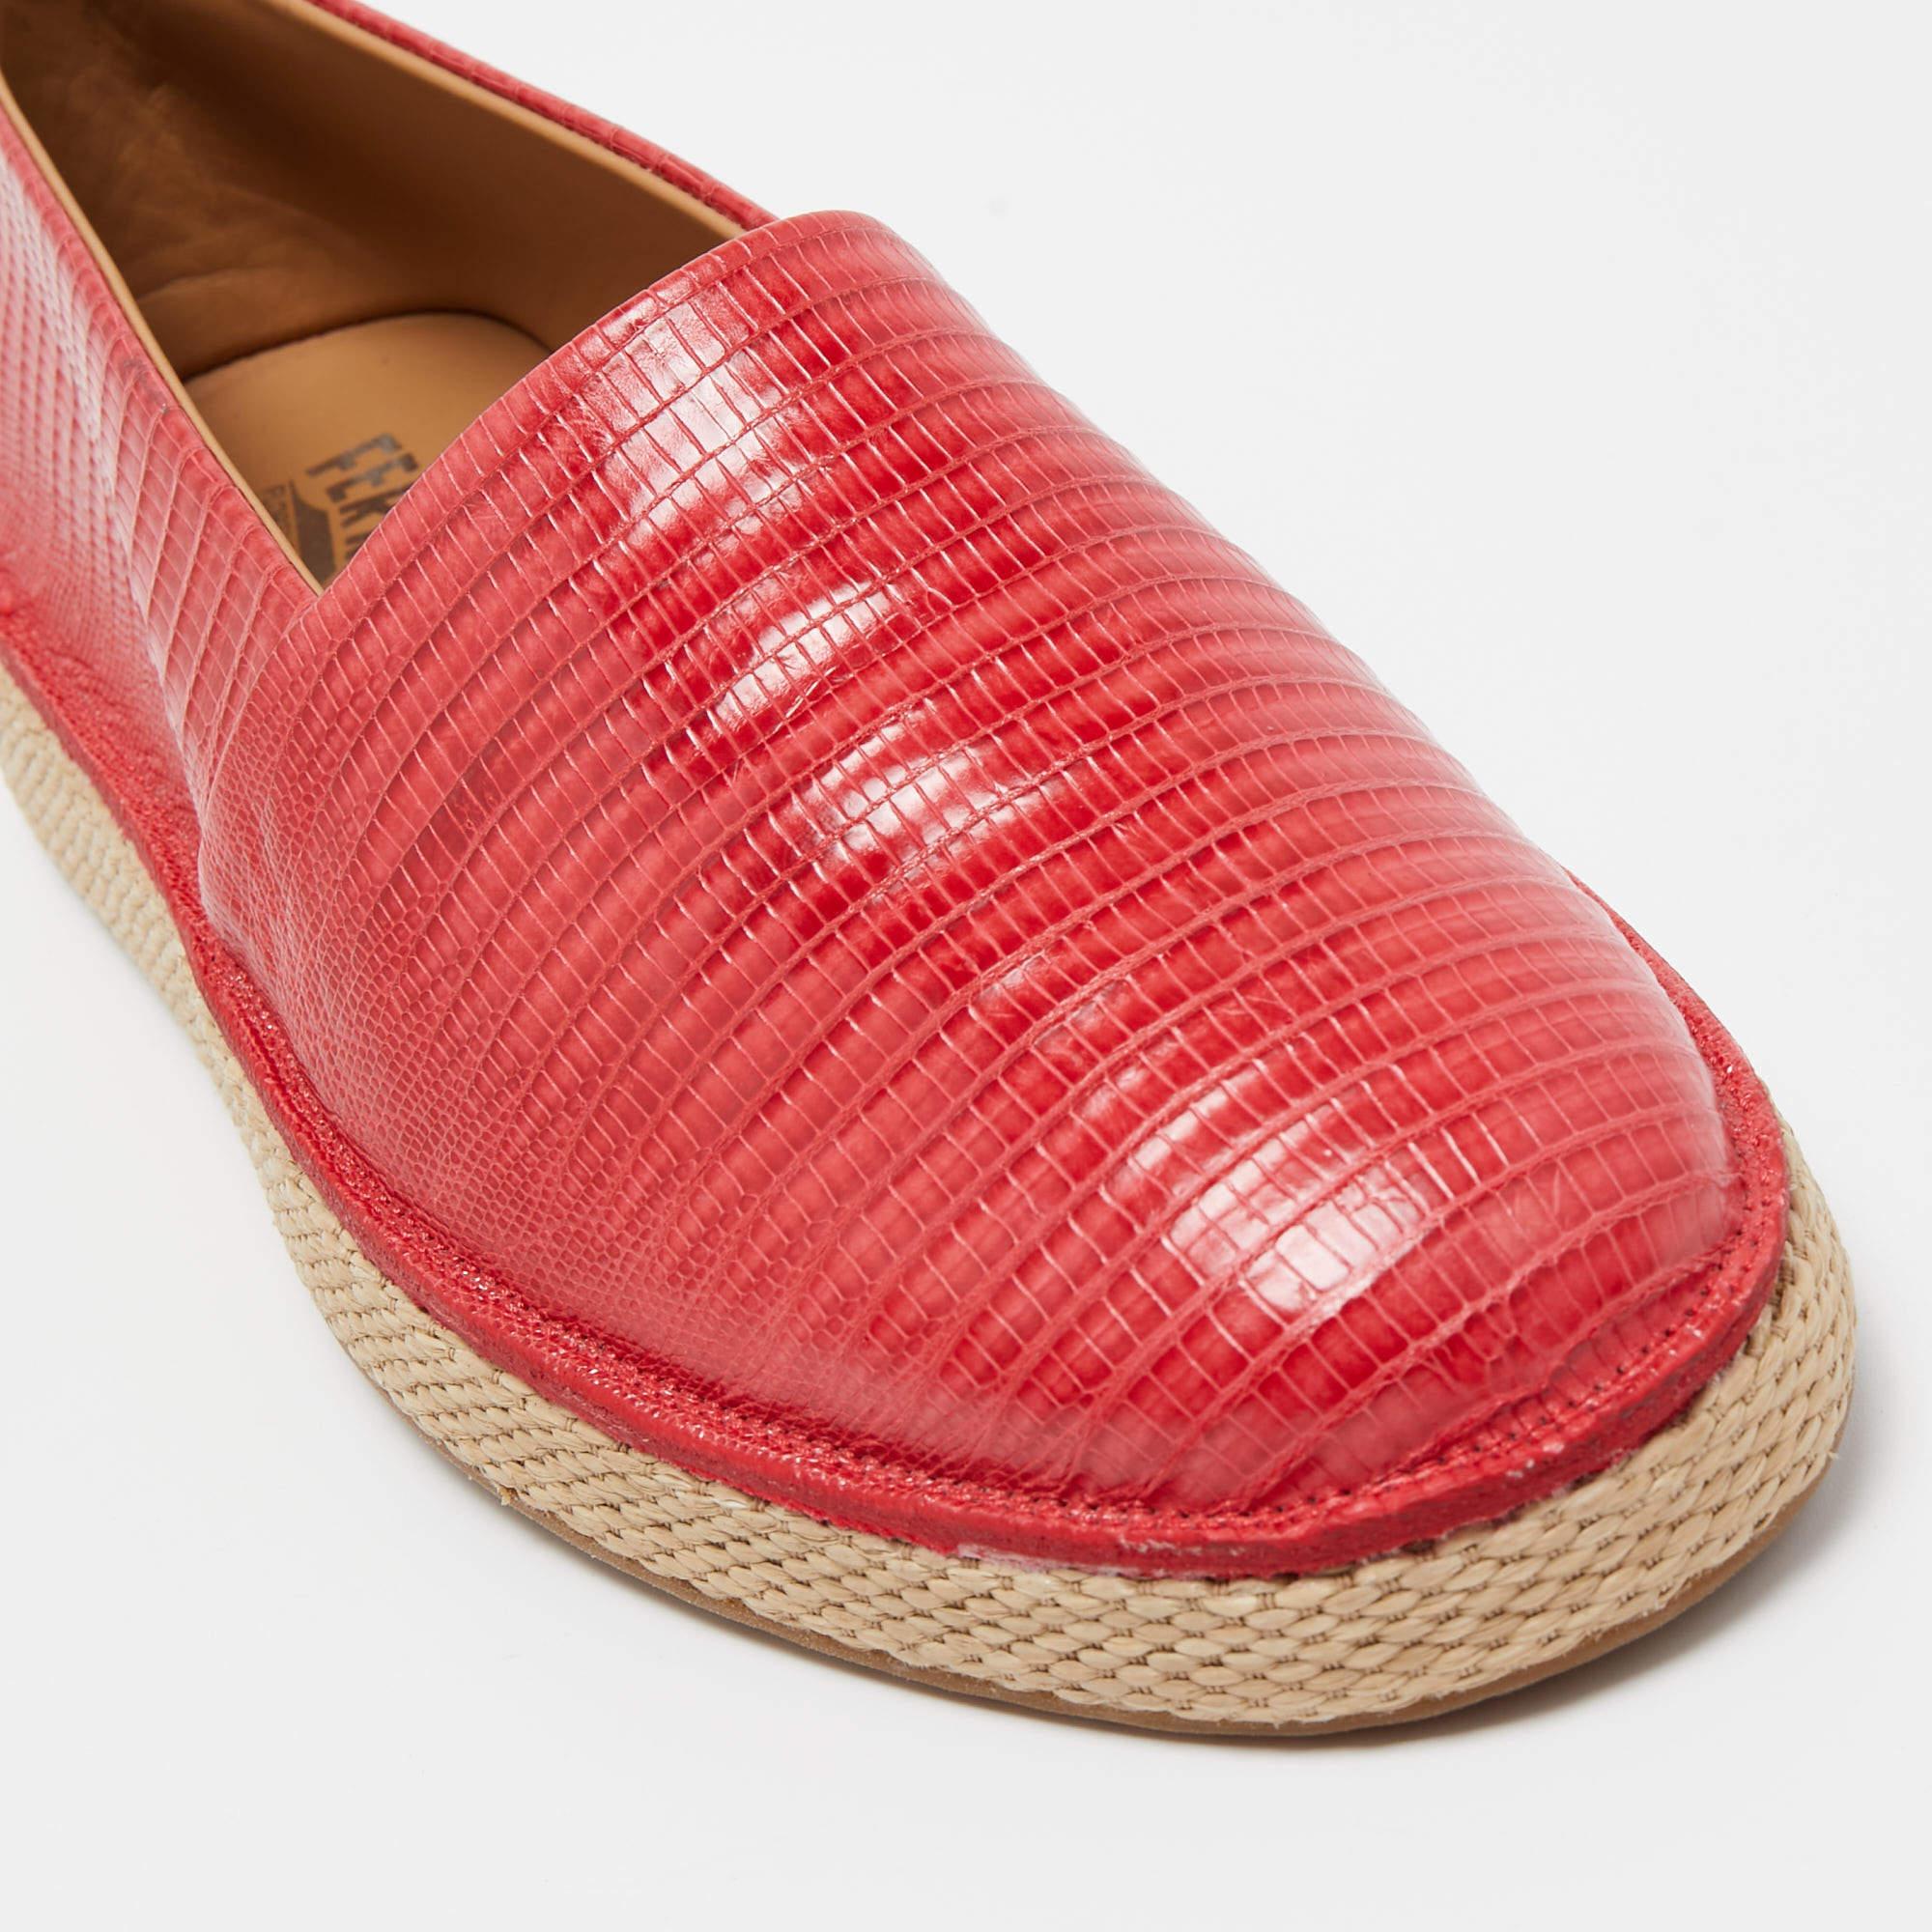 Salvatore Ferragamo Red Lizard Leather Slip On Espadrille Size 42 For Sale 2